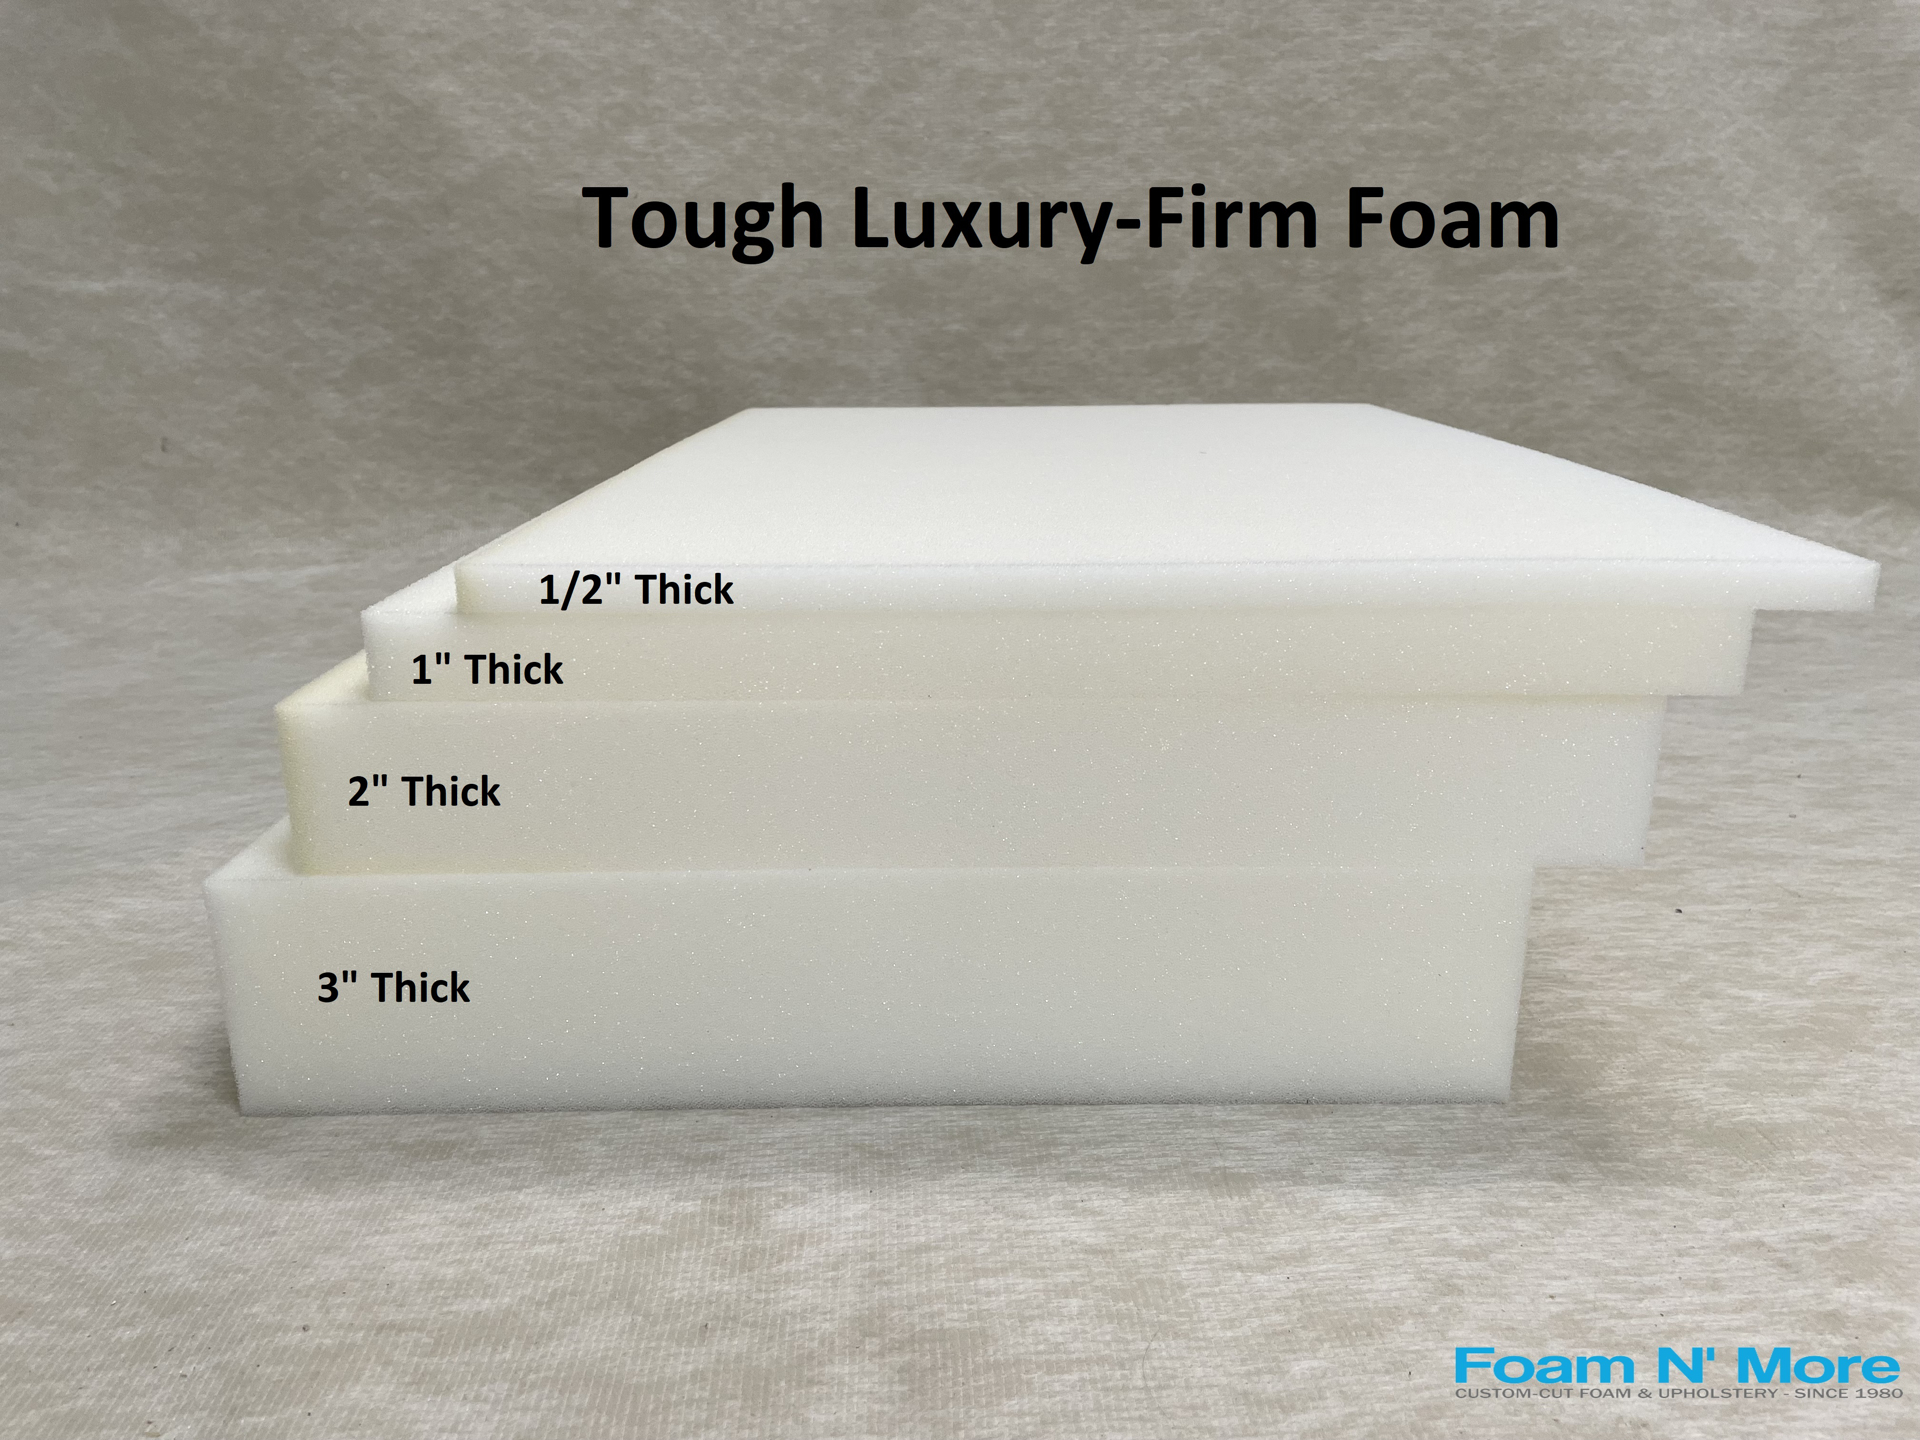 https://foamforyou.com/images/thumbs/0002384_tough-luxury-firm-foam.jpeg